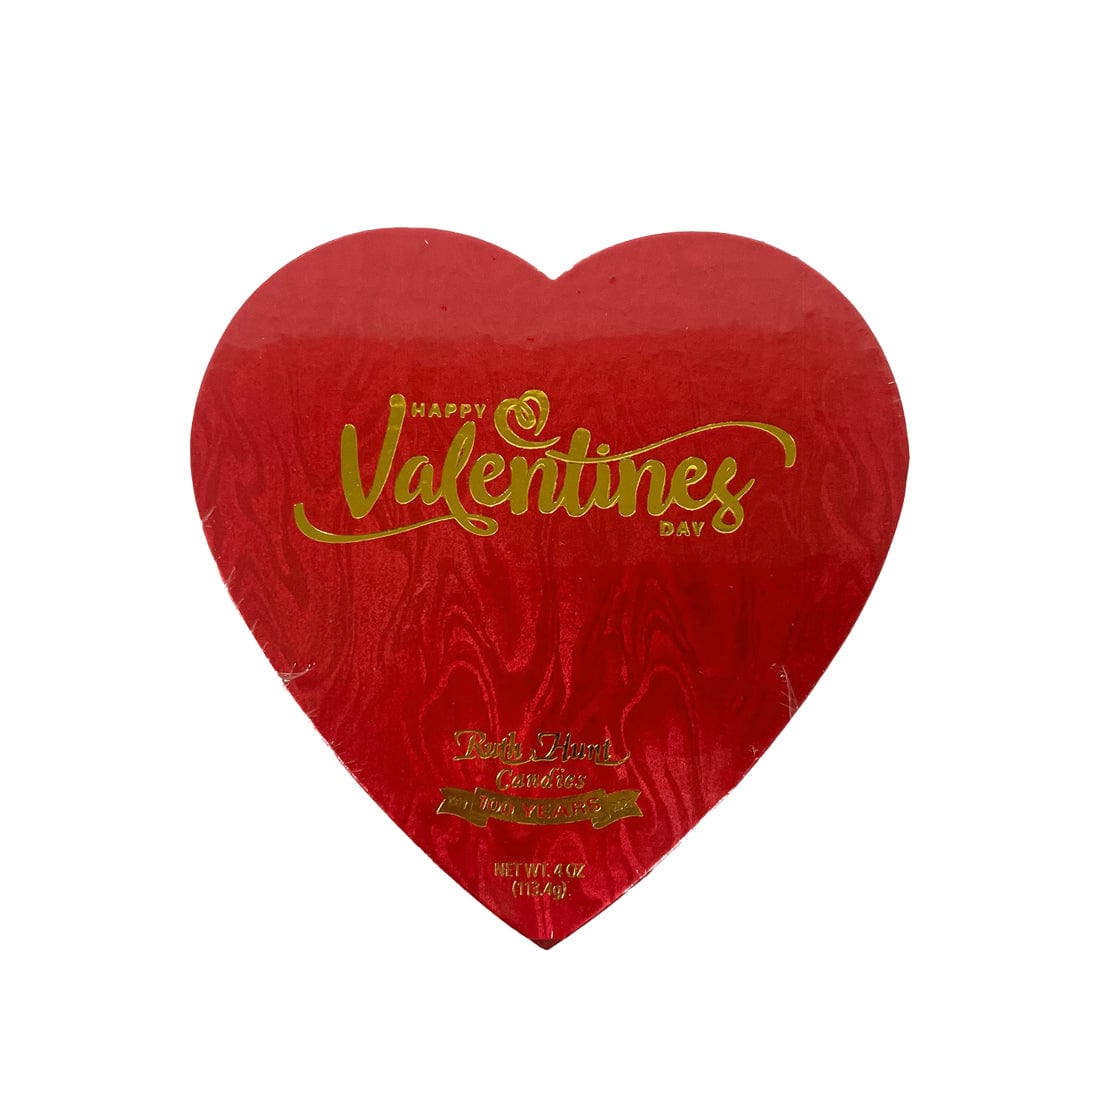 Ruth Hunt Candy Co. Ruth Hunt Chocolate Hearts Gift Box 4 oz